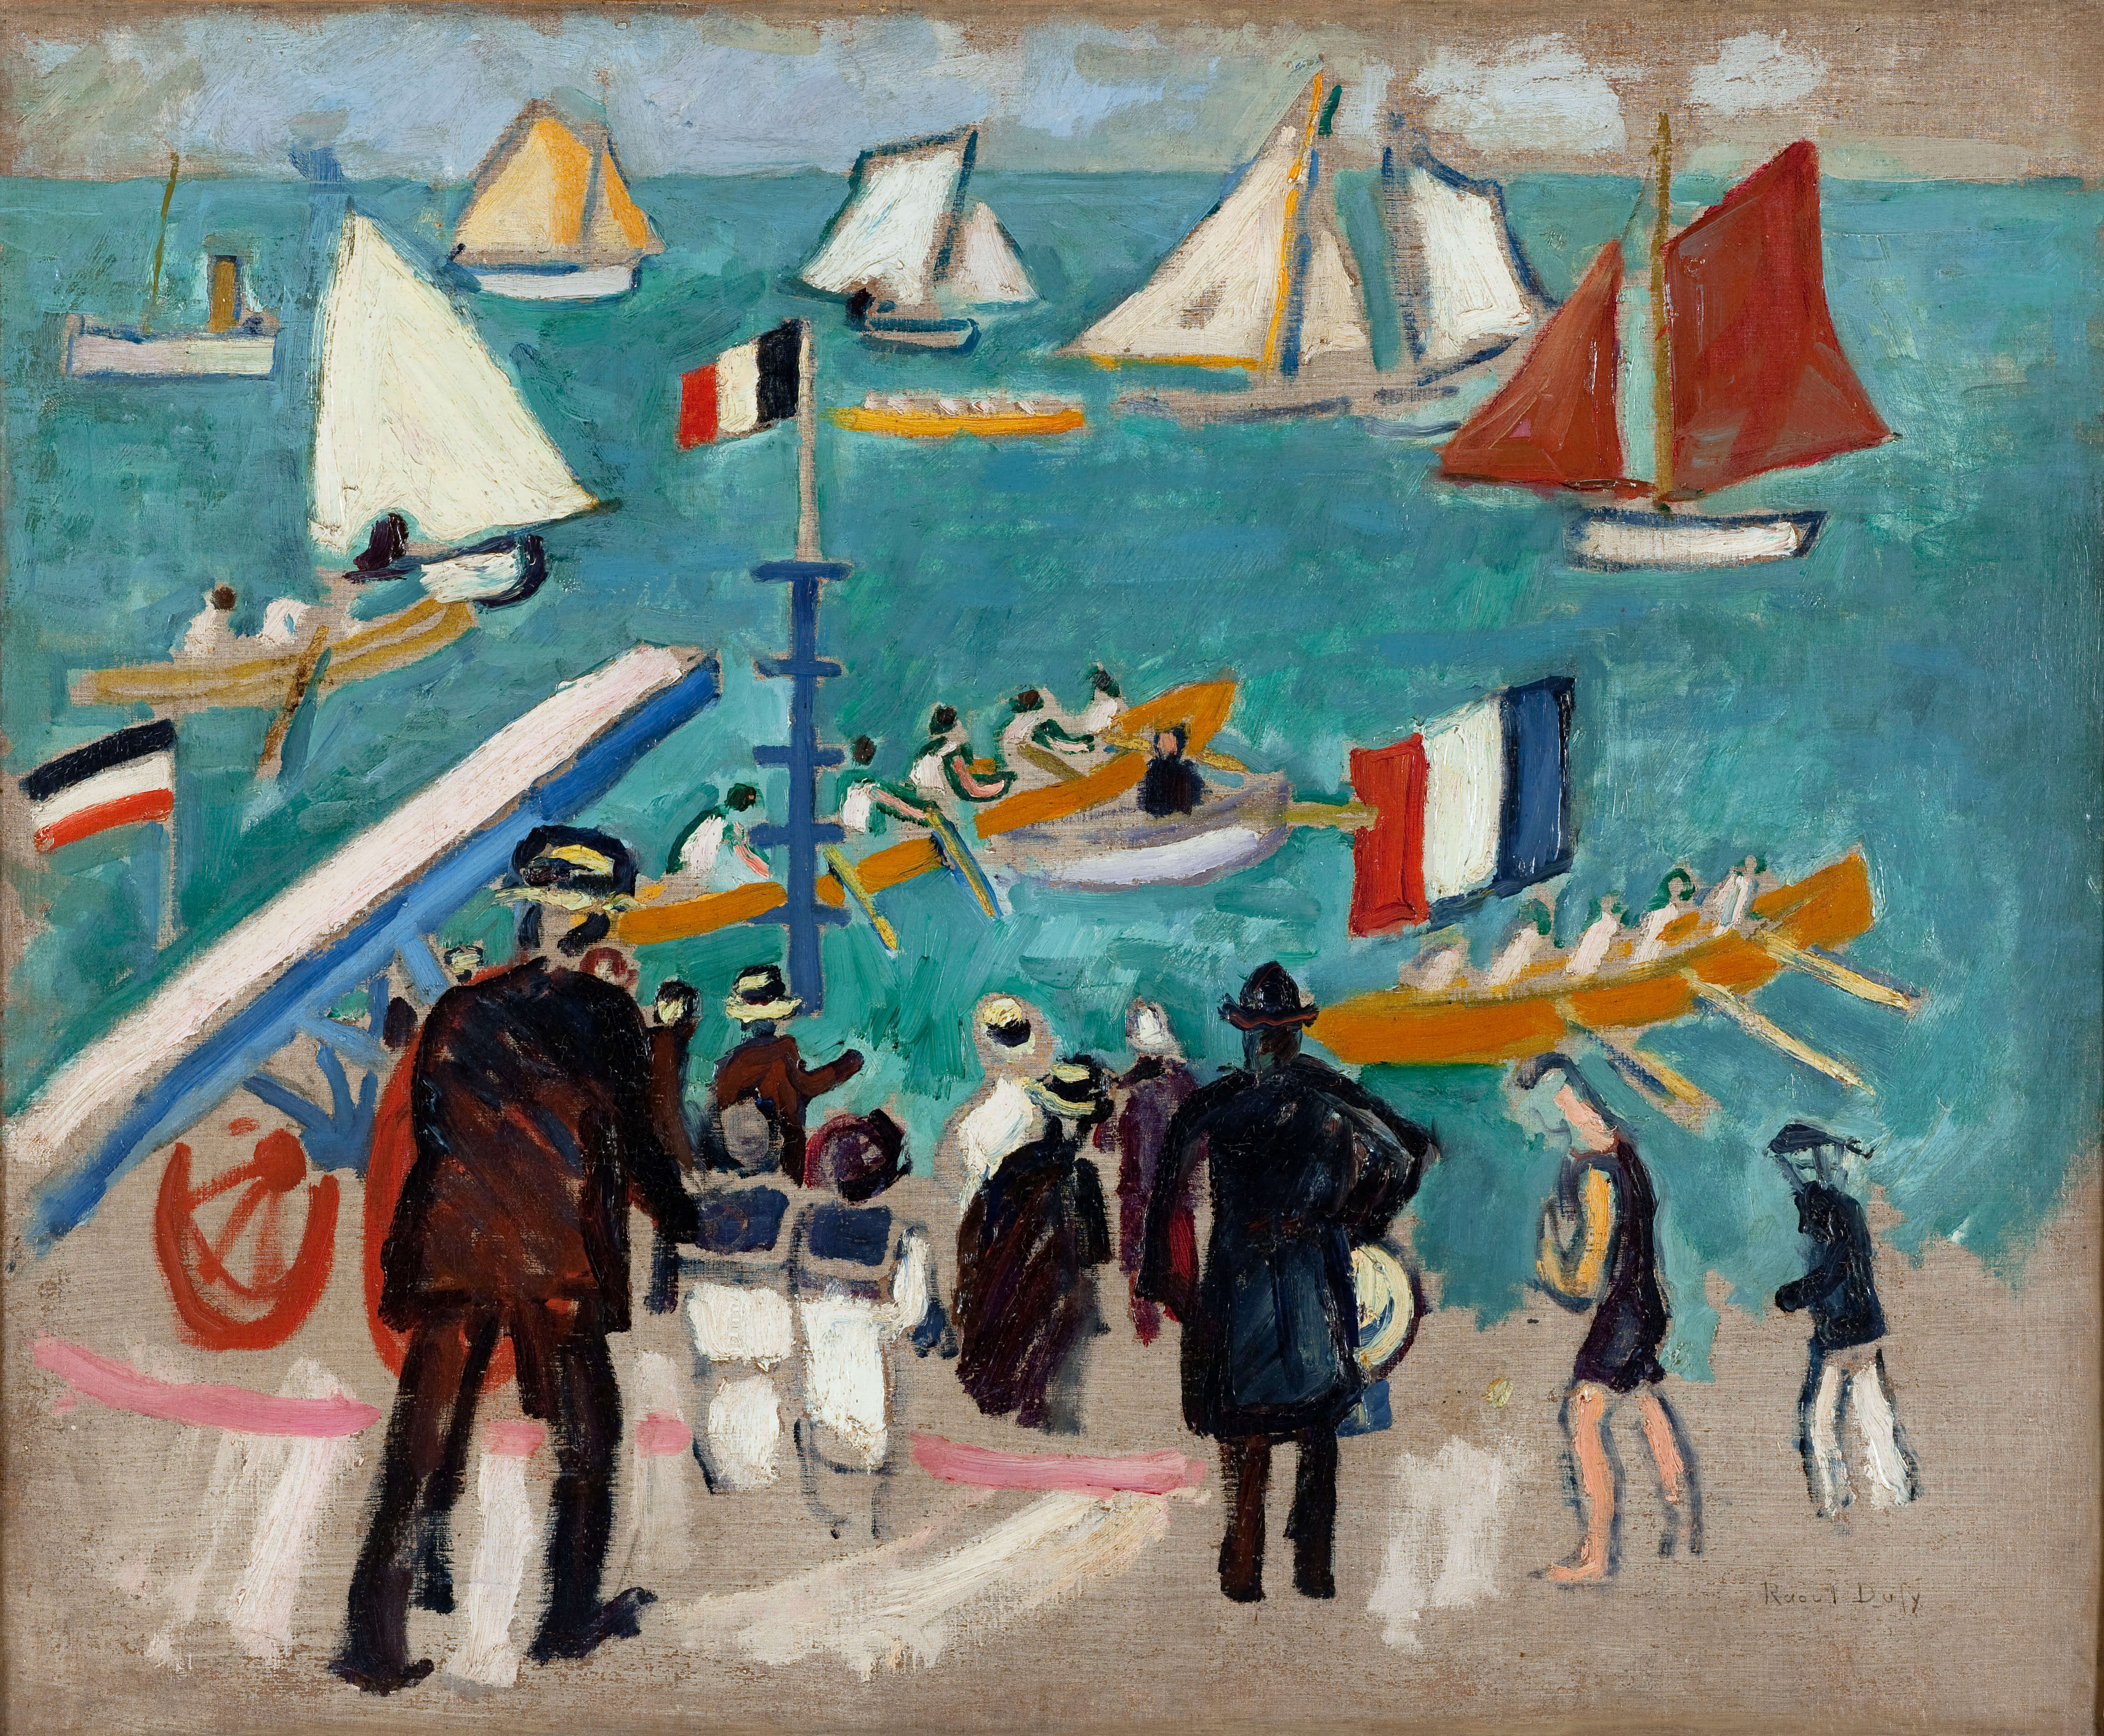 Exposition "Raoul Dufy au Havre"